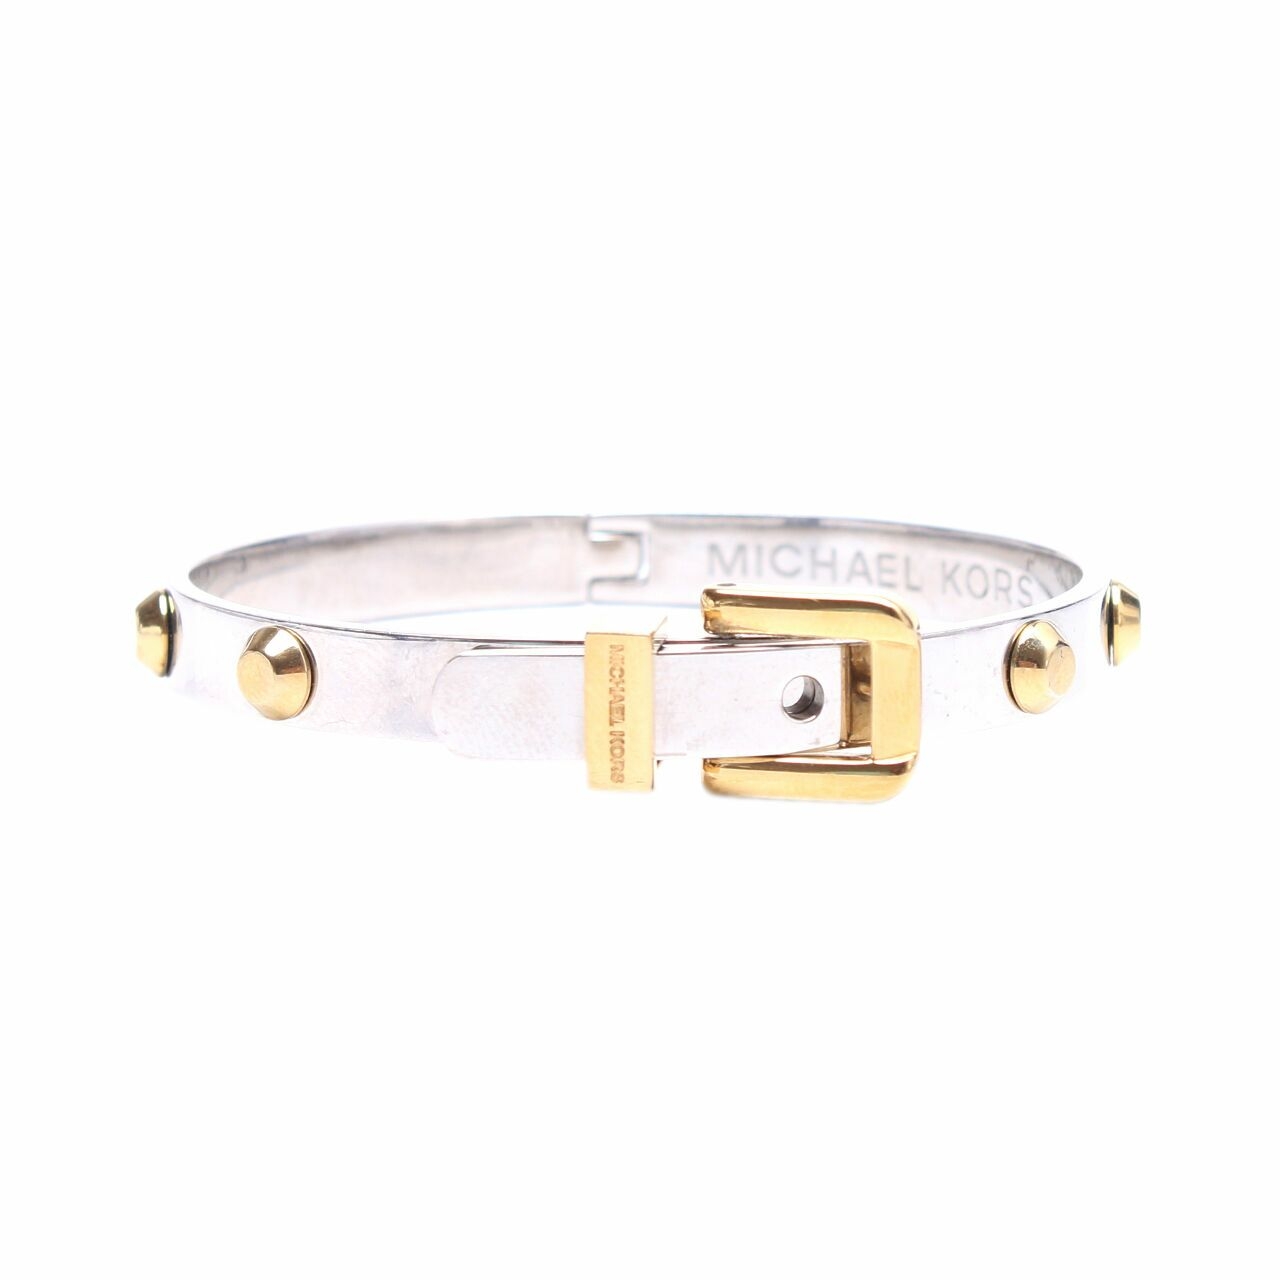 Michael Kors Silver & Gold Astor Two-tone Rivet Buckle Bangle Bracelet Jewelry